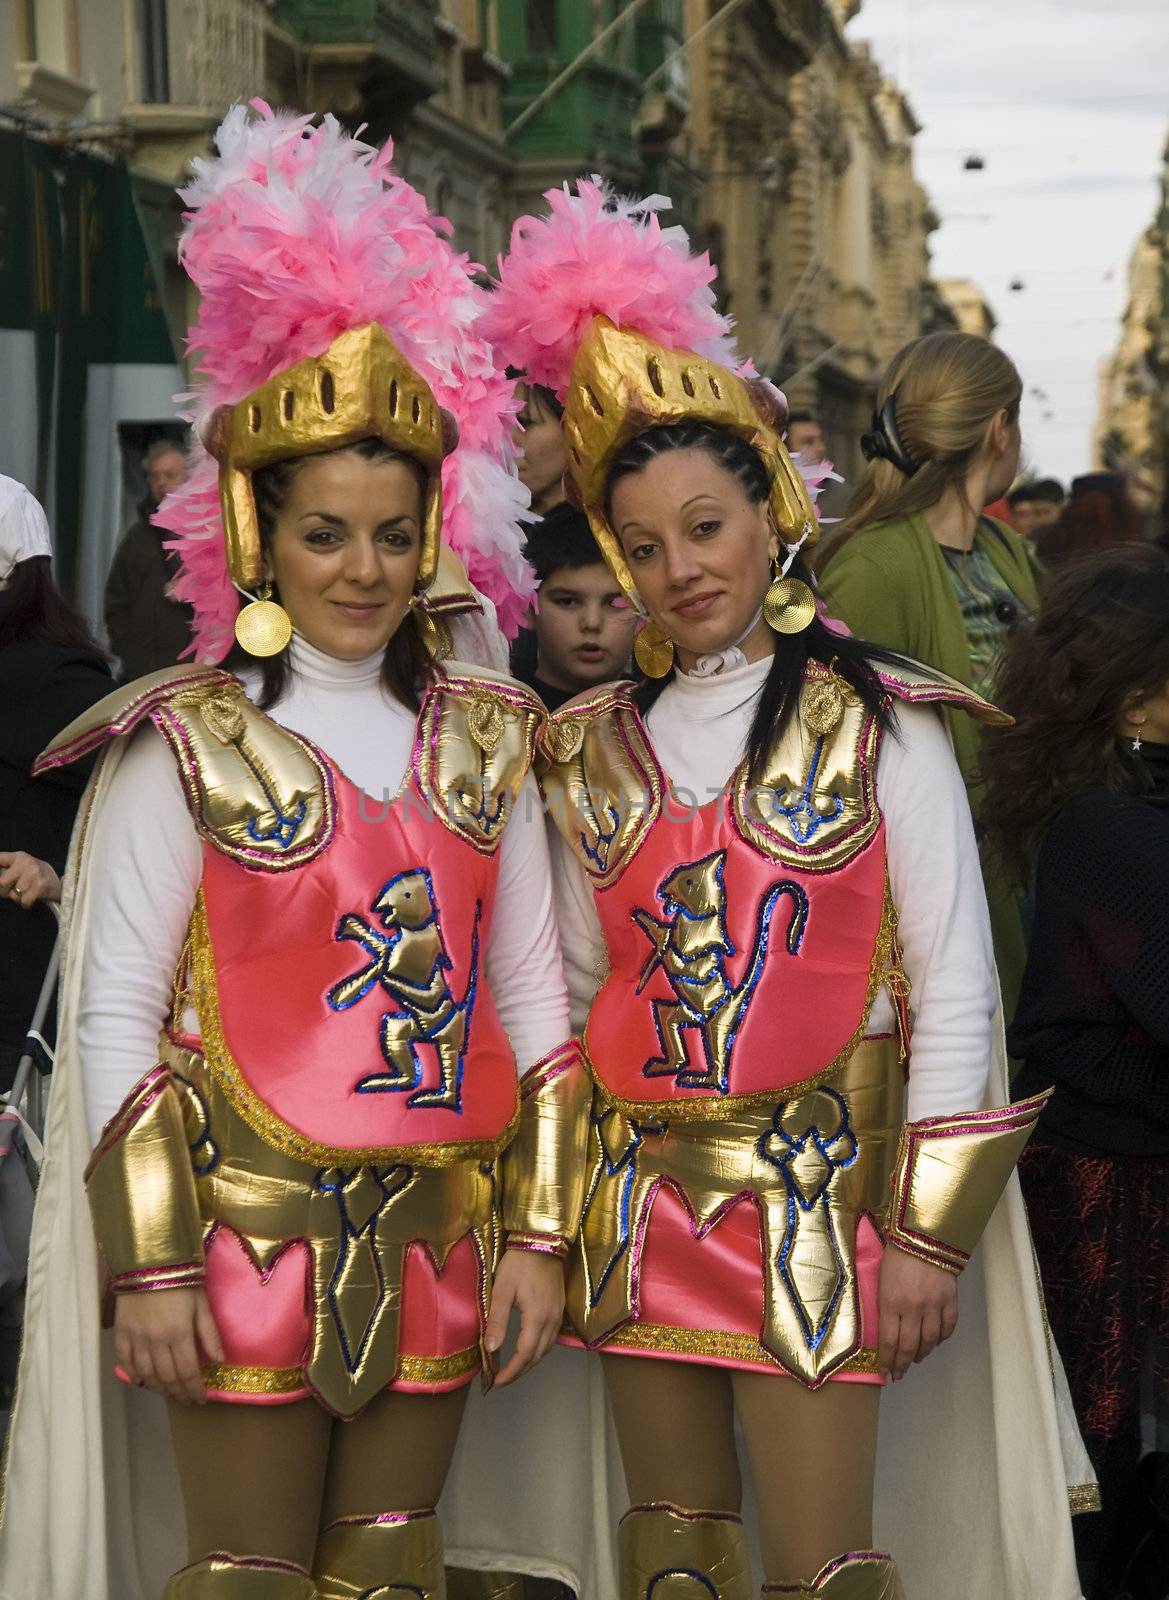 VALLETTA, MALTA - FEB 13 - Scenes and moments from the International Carnival of Malta on Saturday February 13th 2010